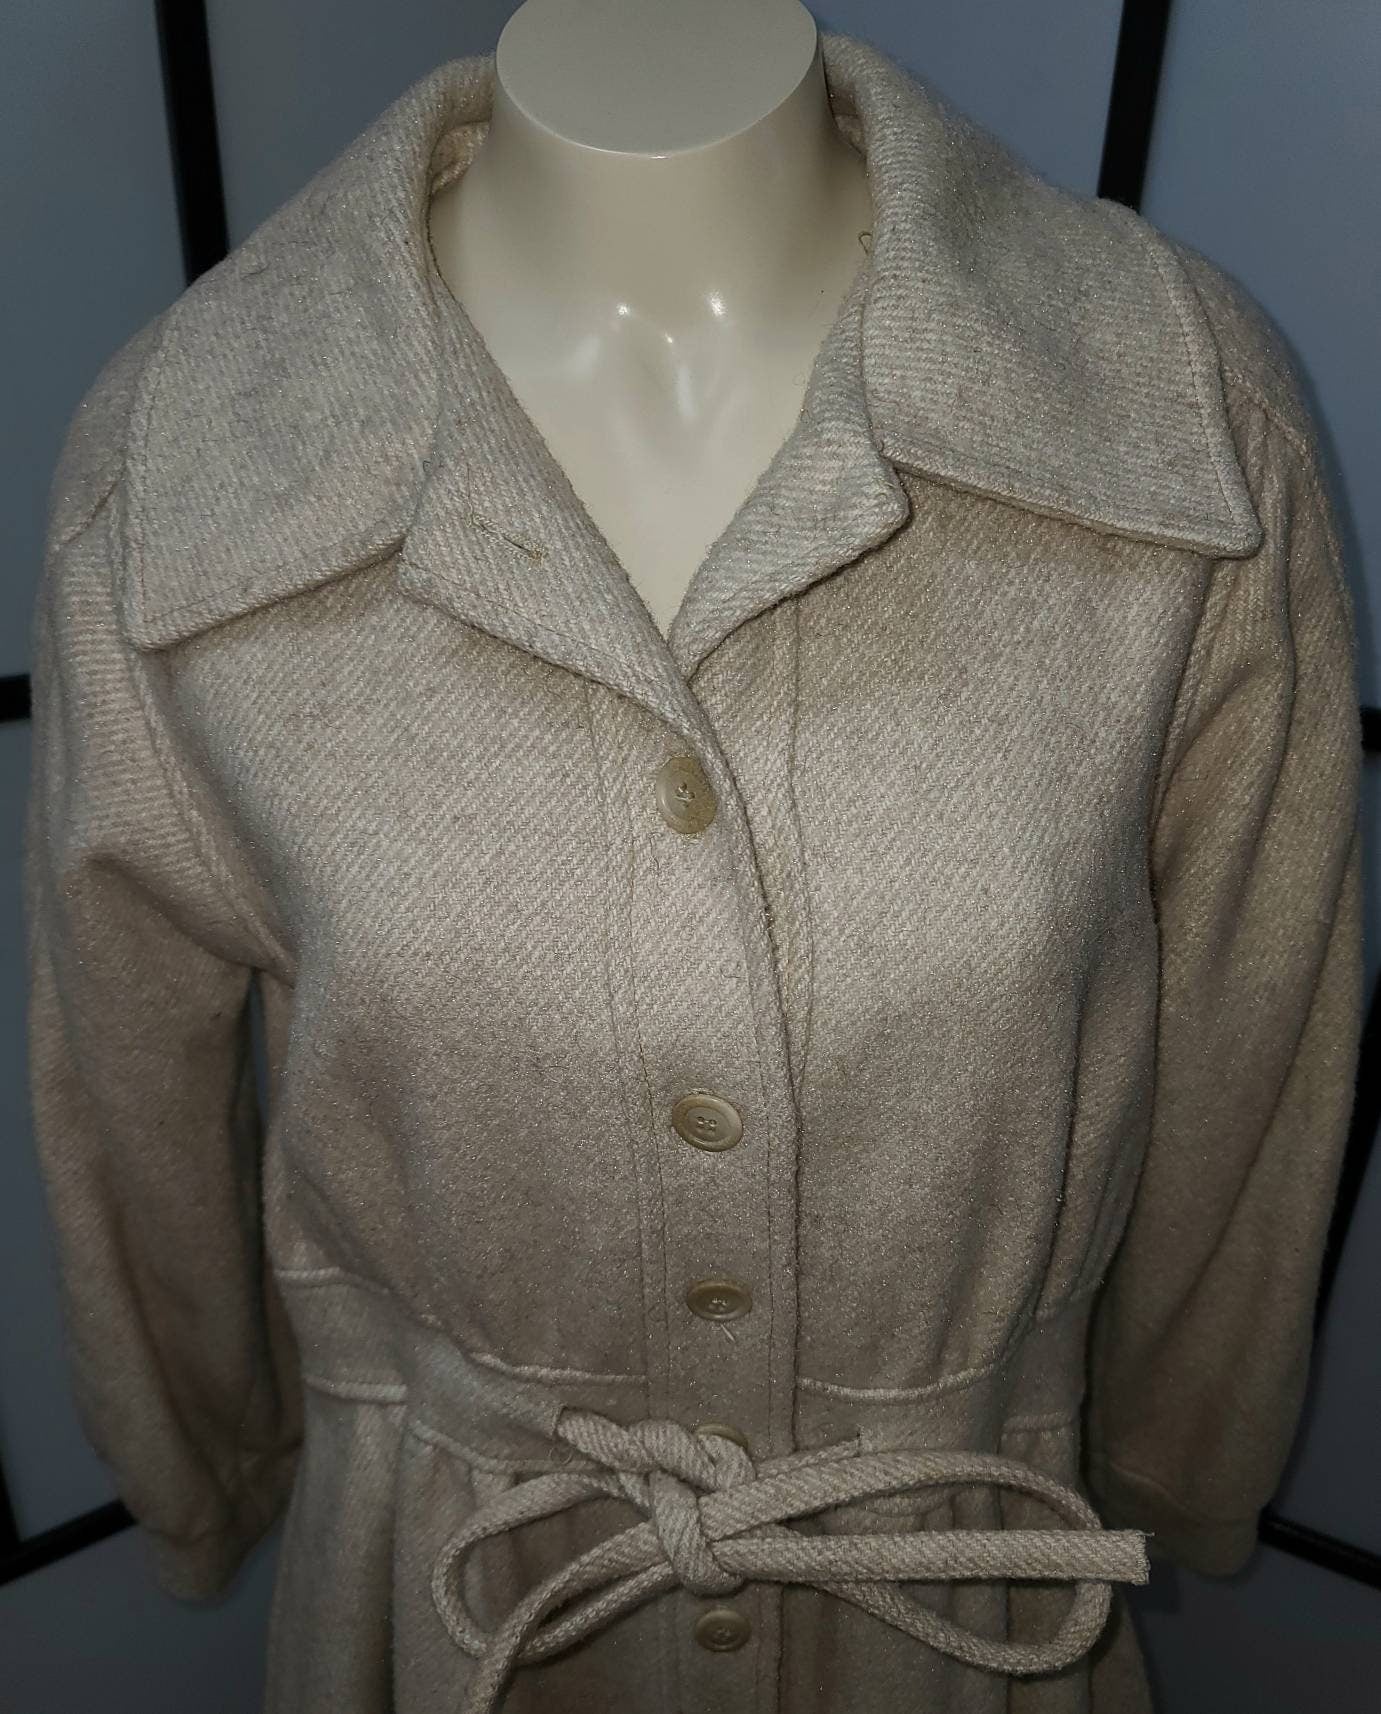 SALE Vintage Long Coat 1970s Cream Burlap Wool Blend Princess Coat Tie Waist Boho M